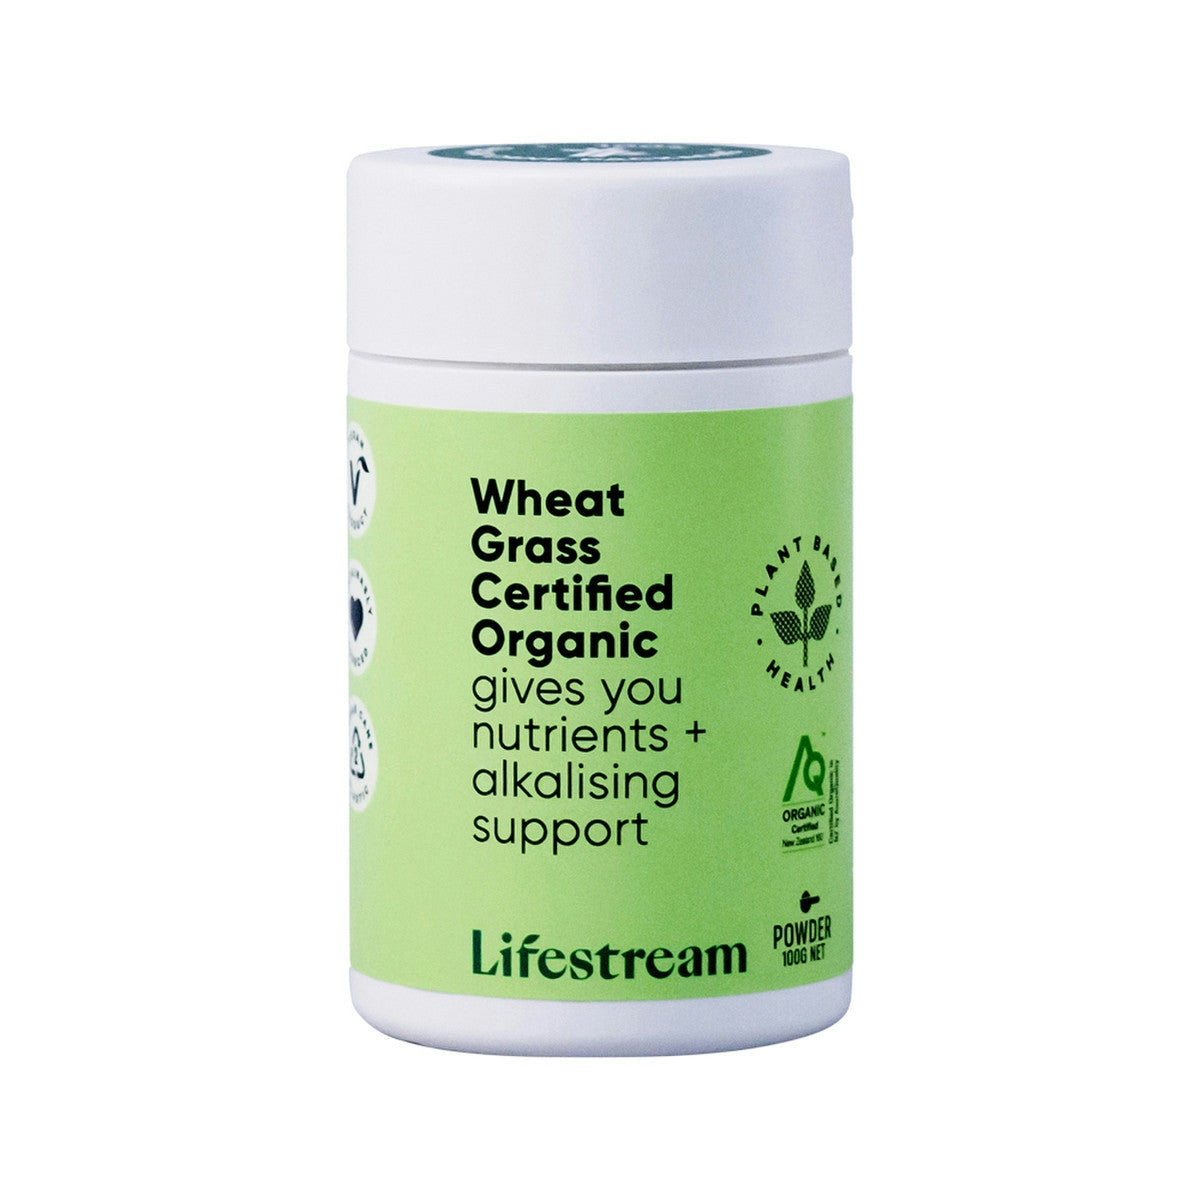 image of Lifestream Wheat Grass Certified Organic Powder 100g on white background